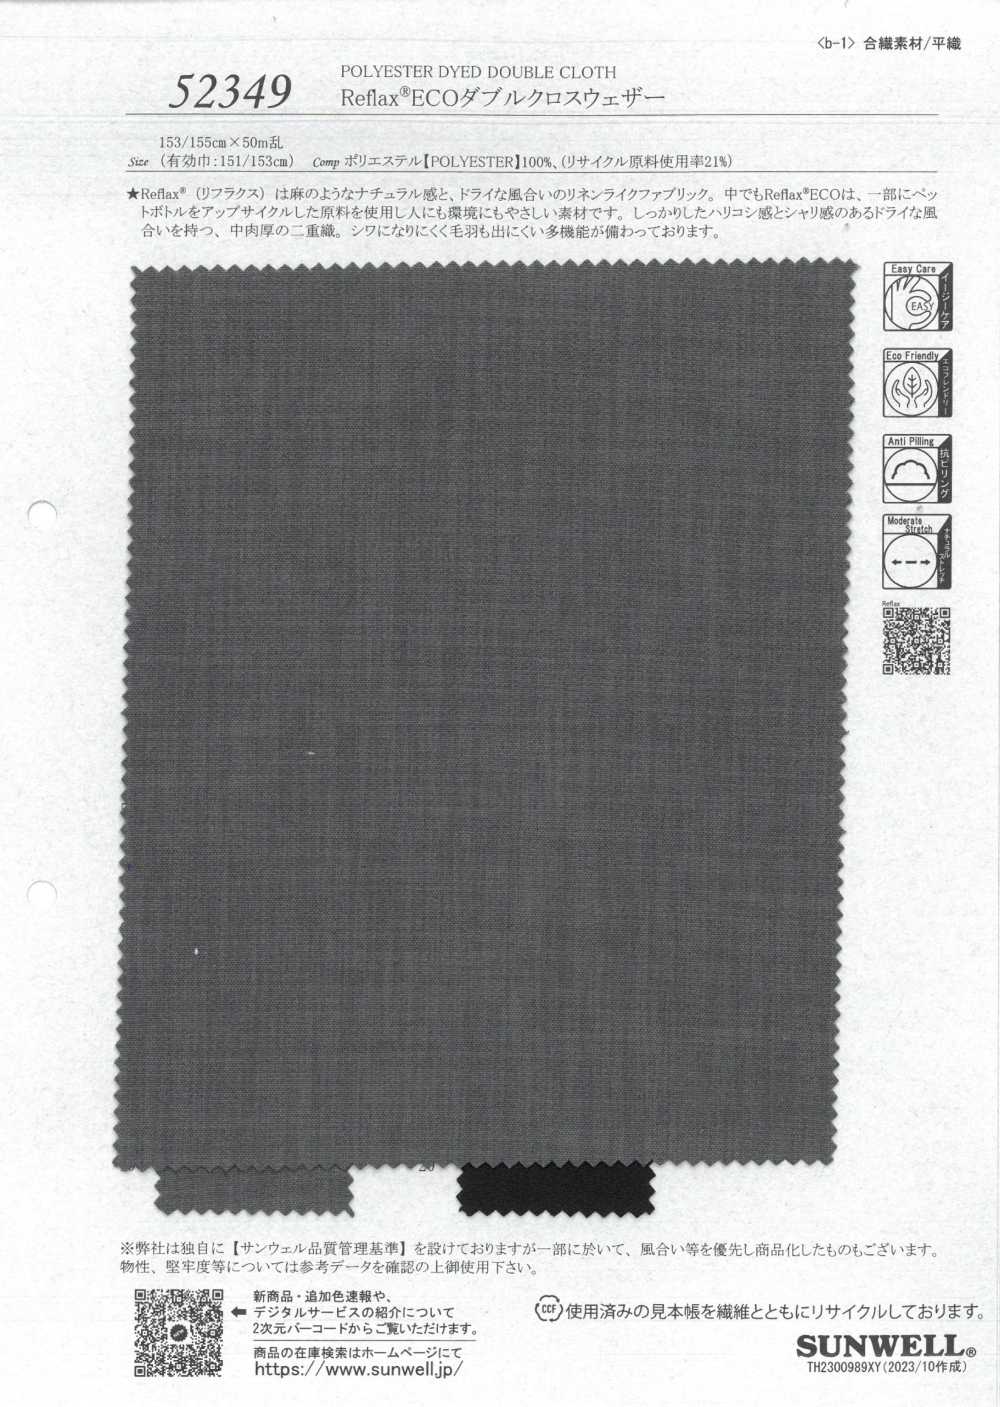 52349 Reflax®ECO Double Cross Weather Cloth[Textile / Fabric] SUNWELL